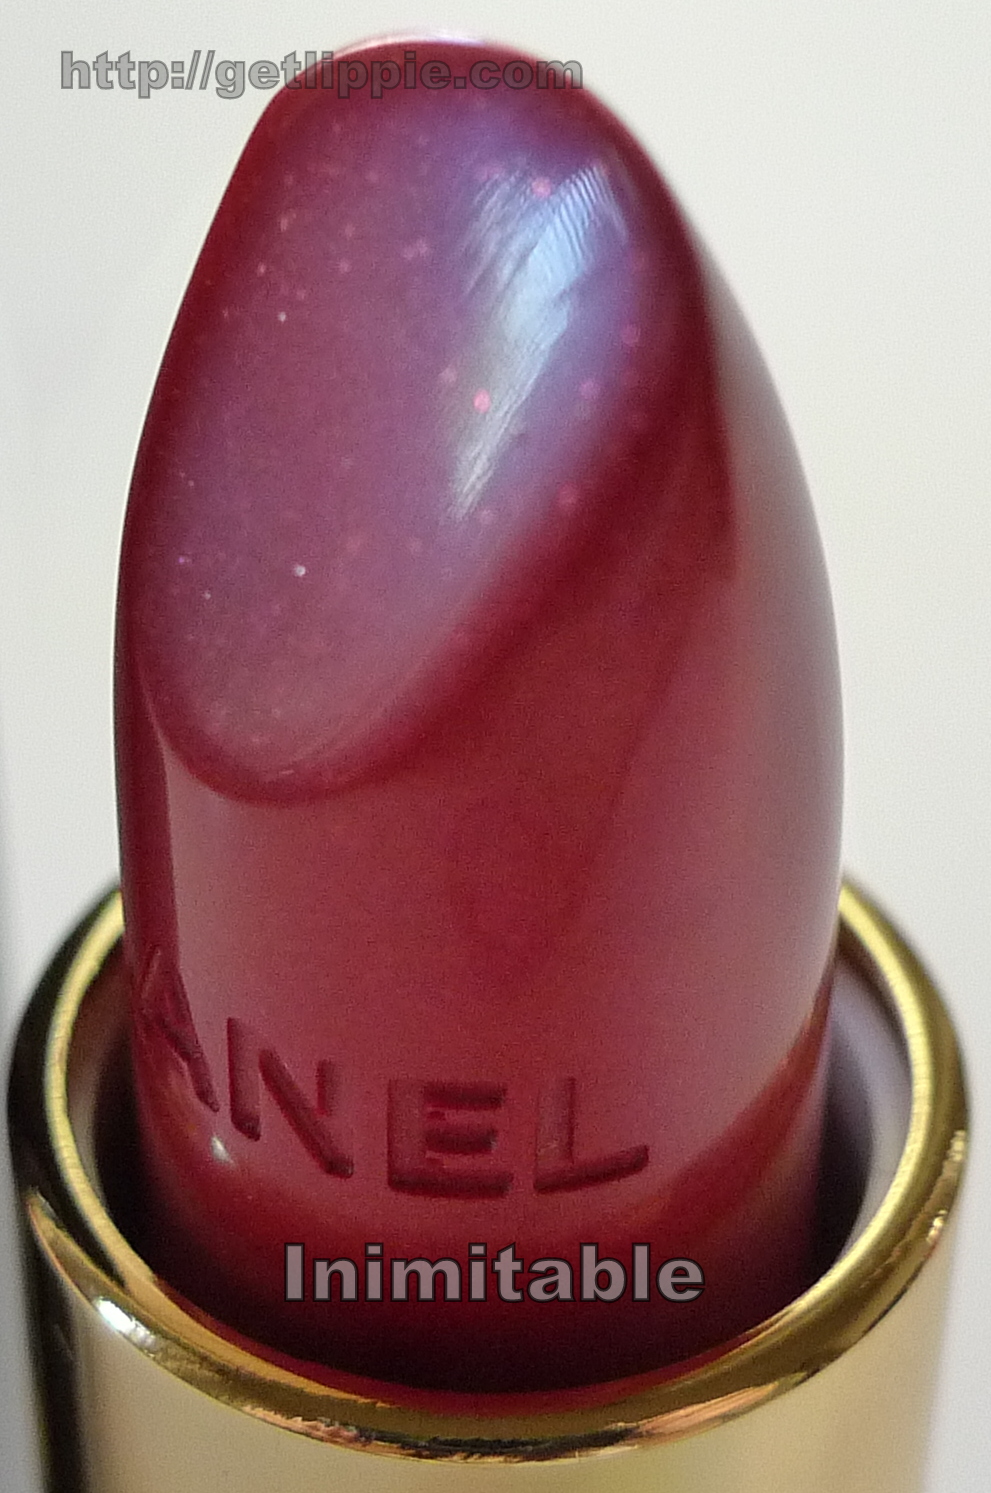 Five Gorgeous Chanel Rouge Allure Lipsticks